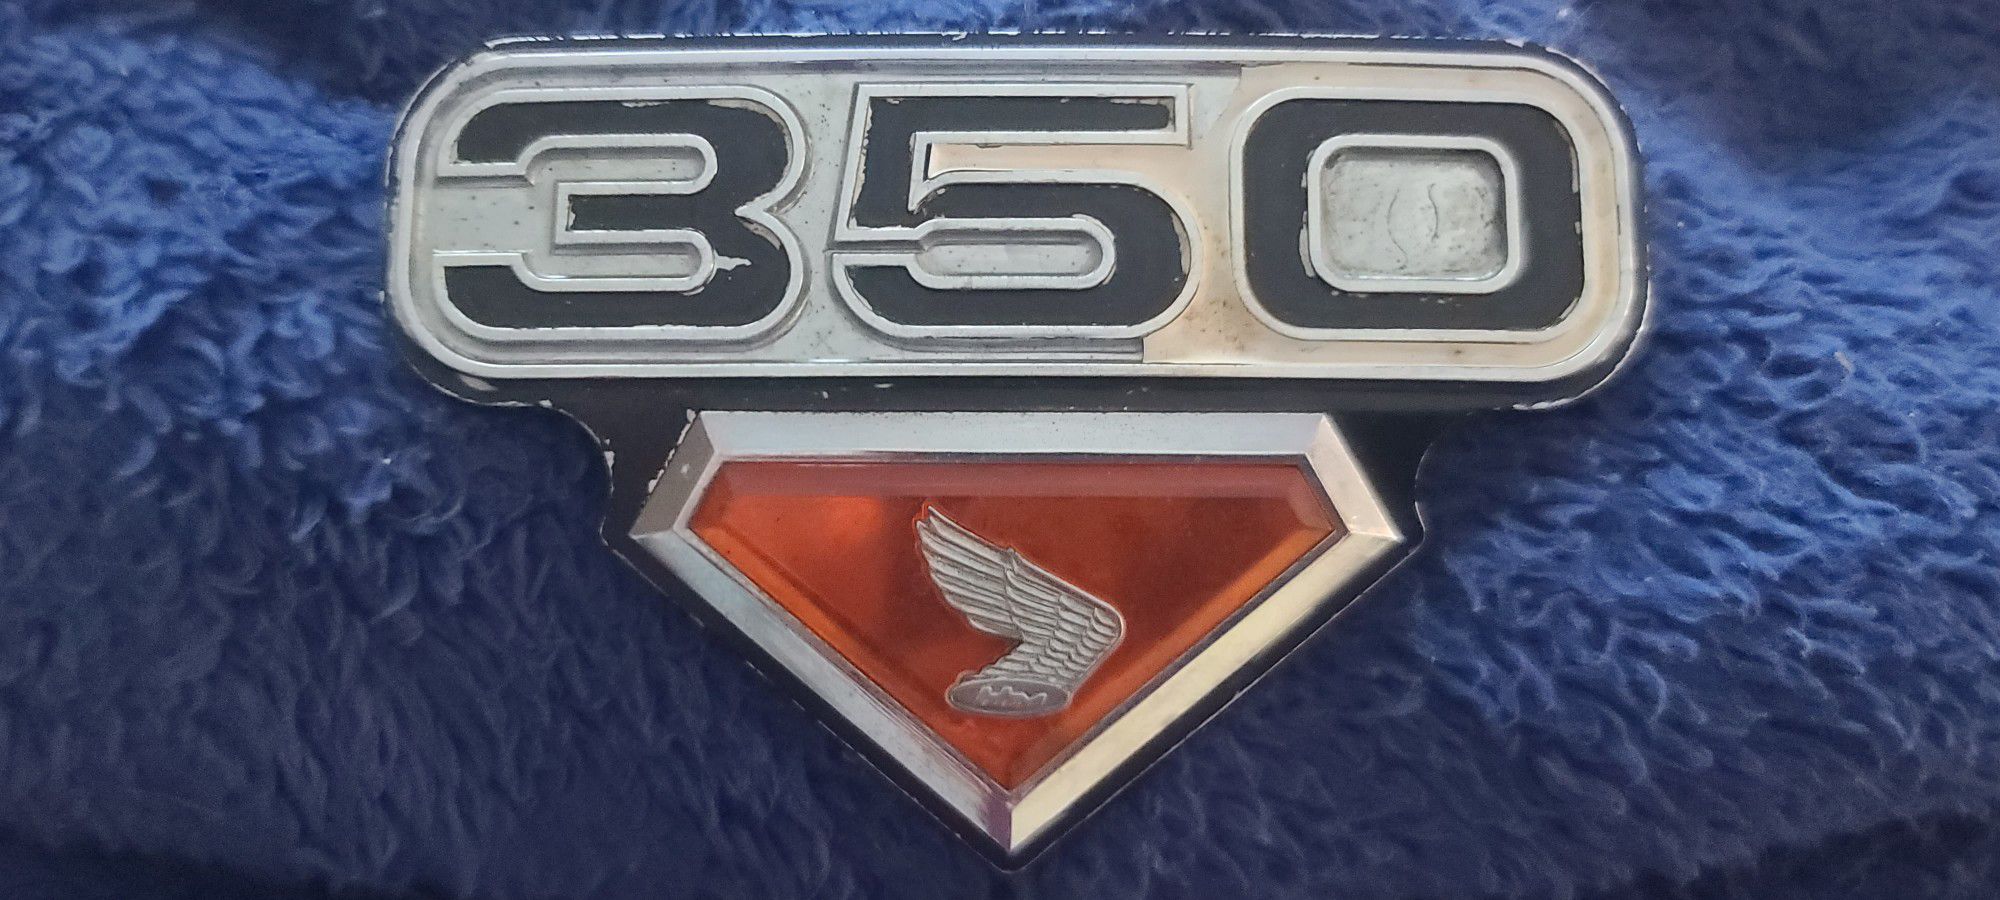 Honda Motorcycle 350cc Badge Vintage*